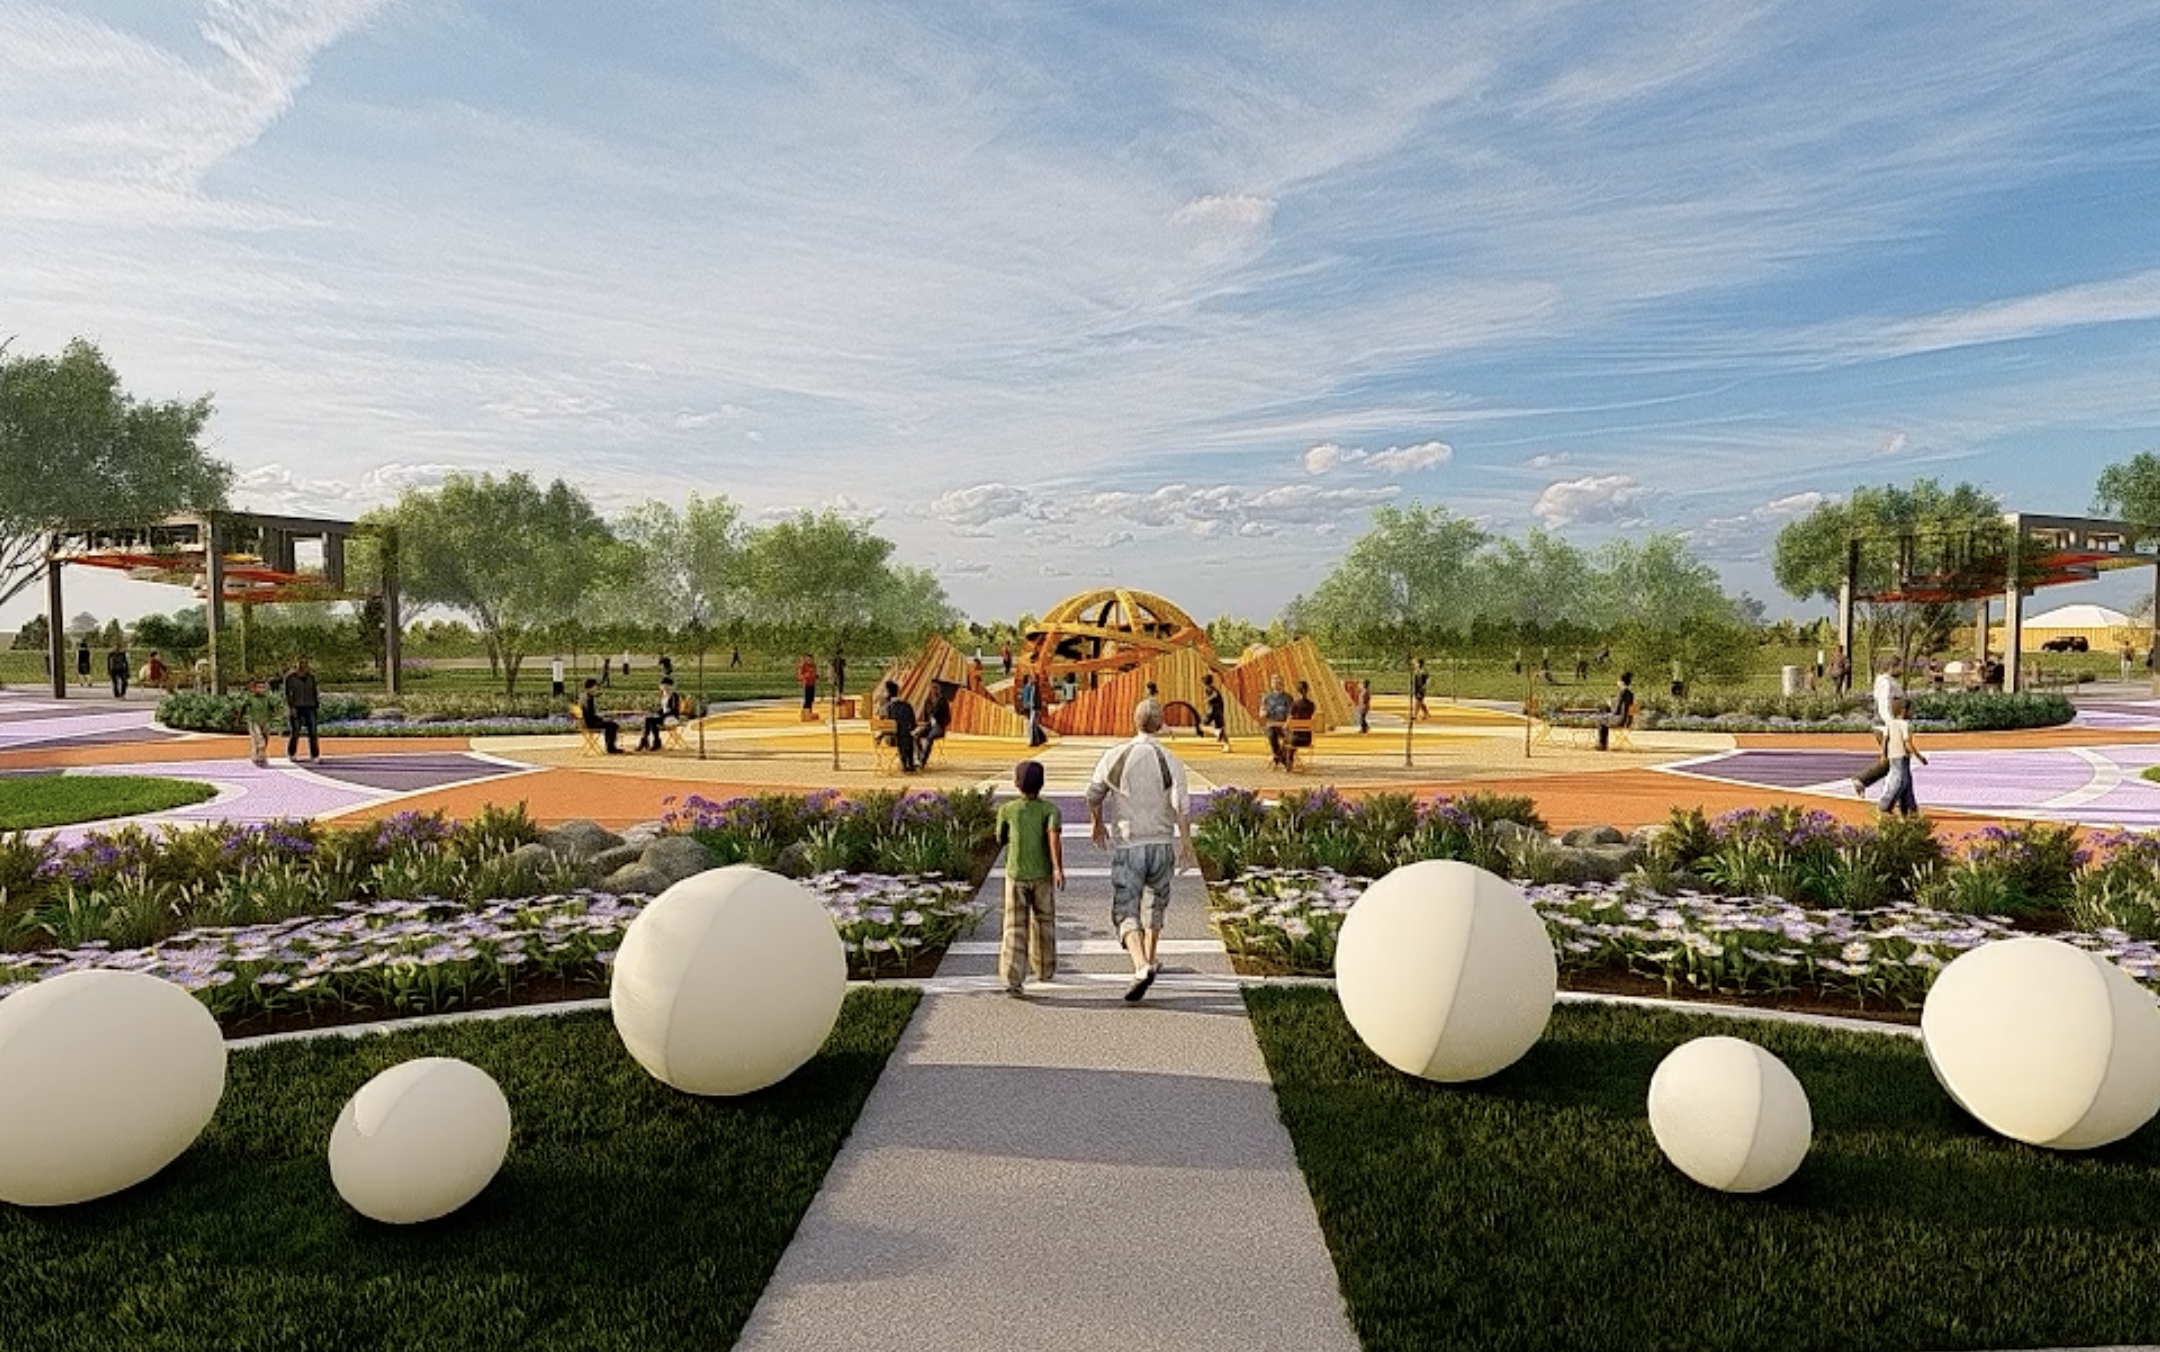 new amenity park in richmond